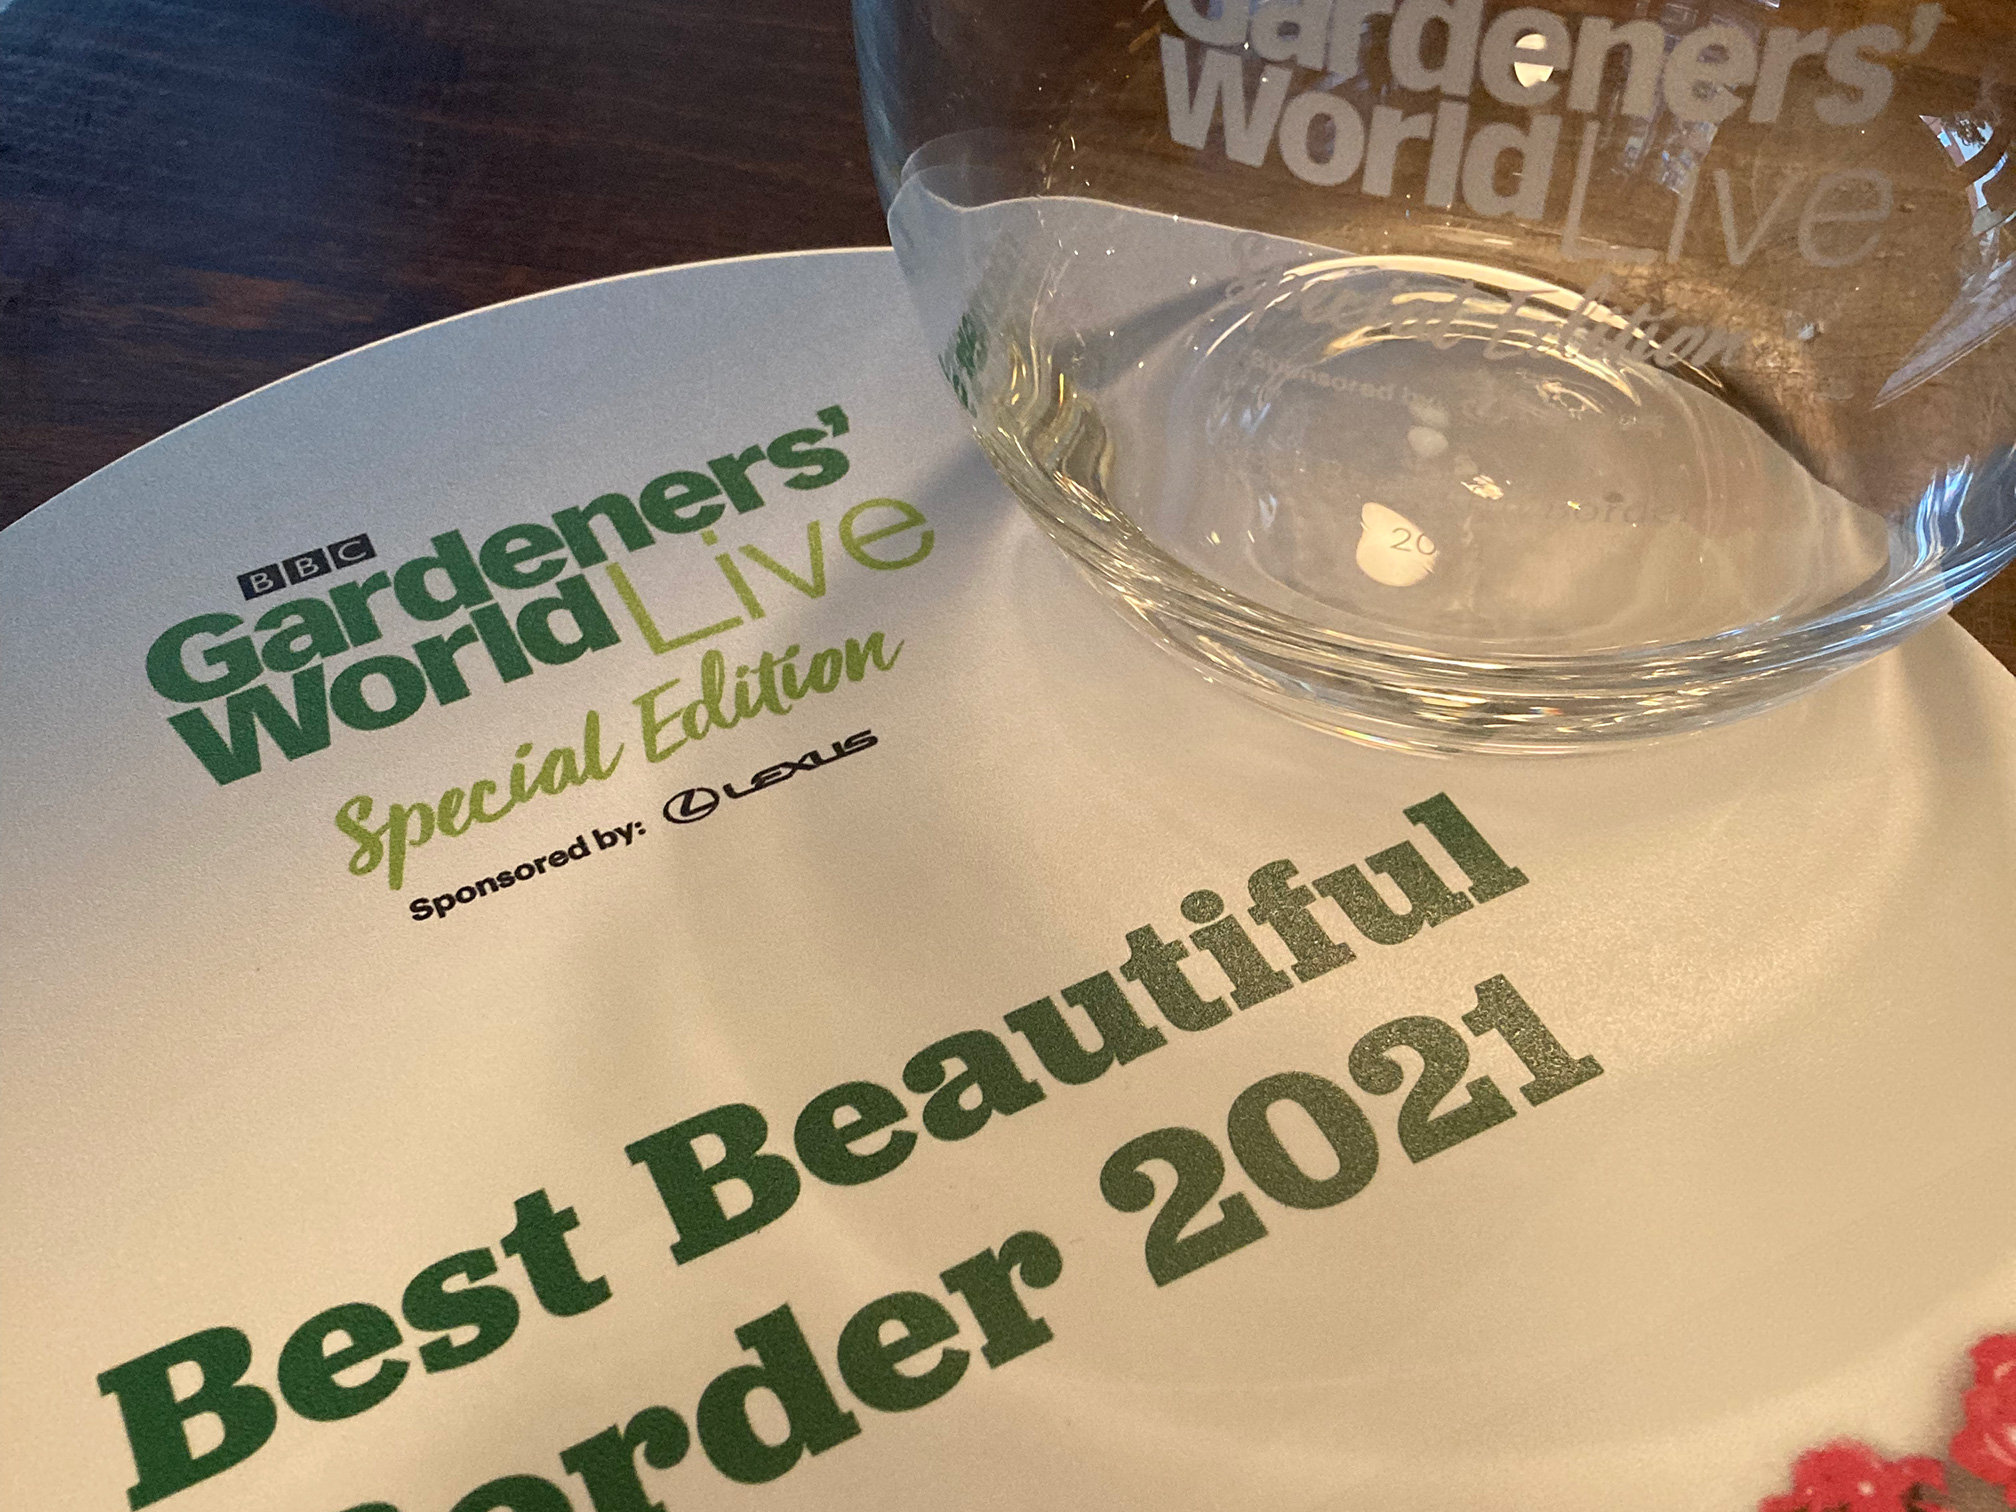 Award for Best Beautiful Border 